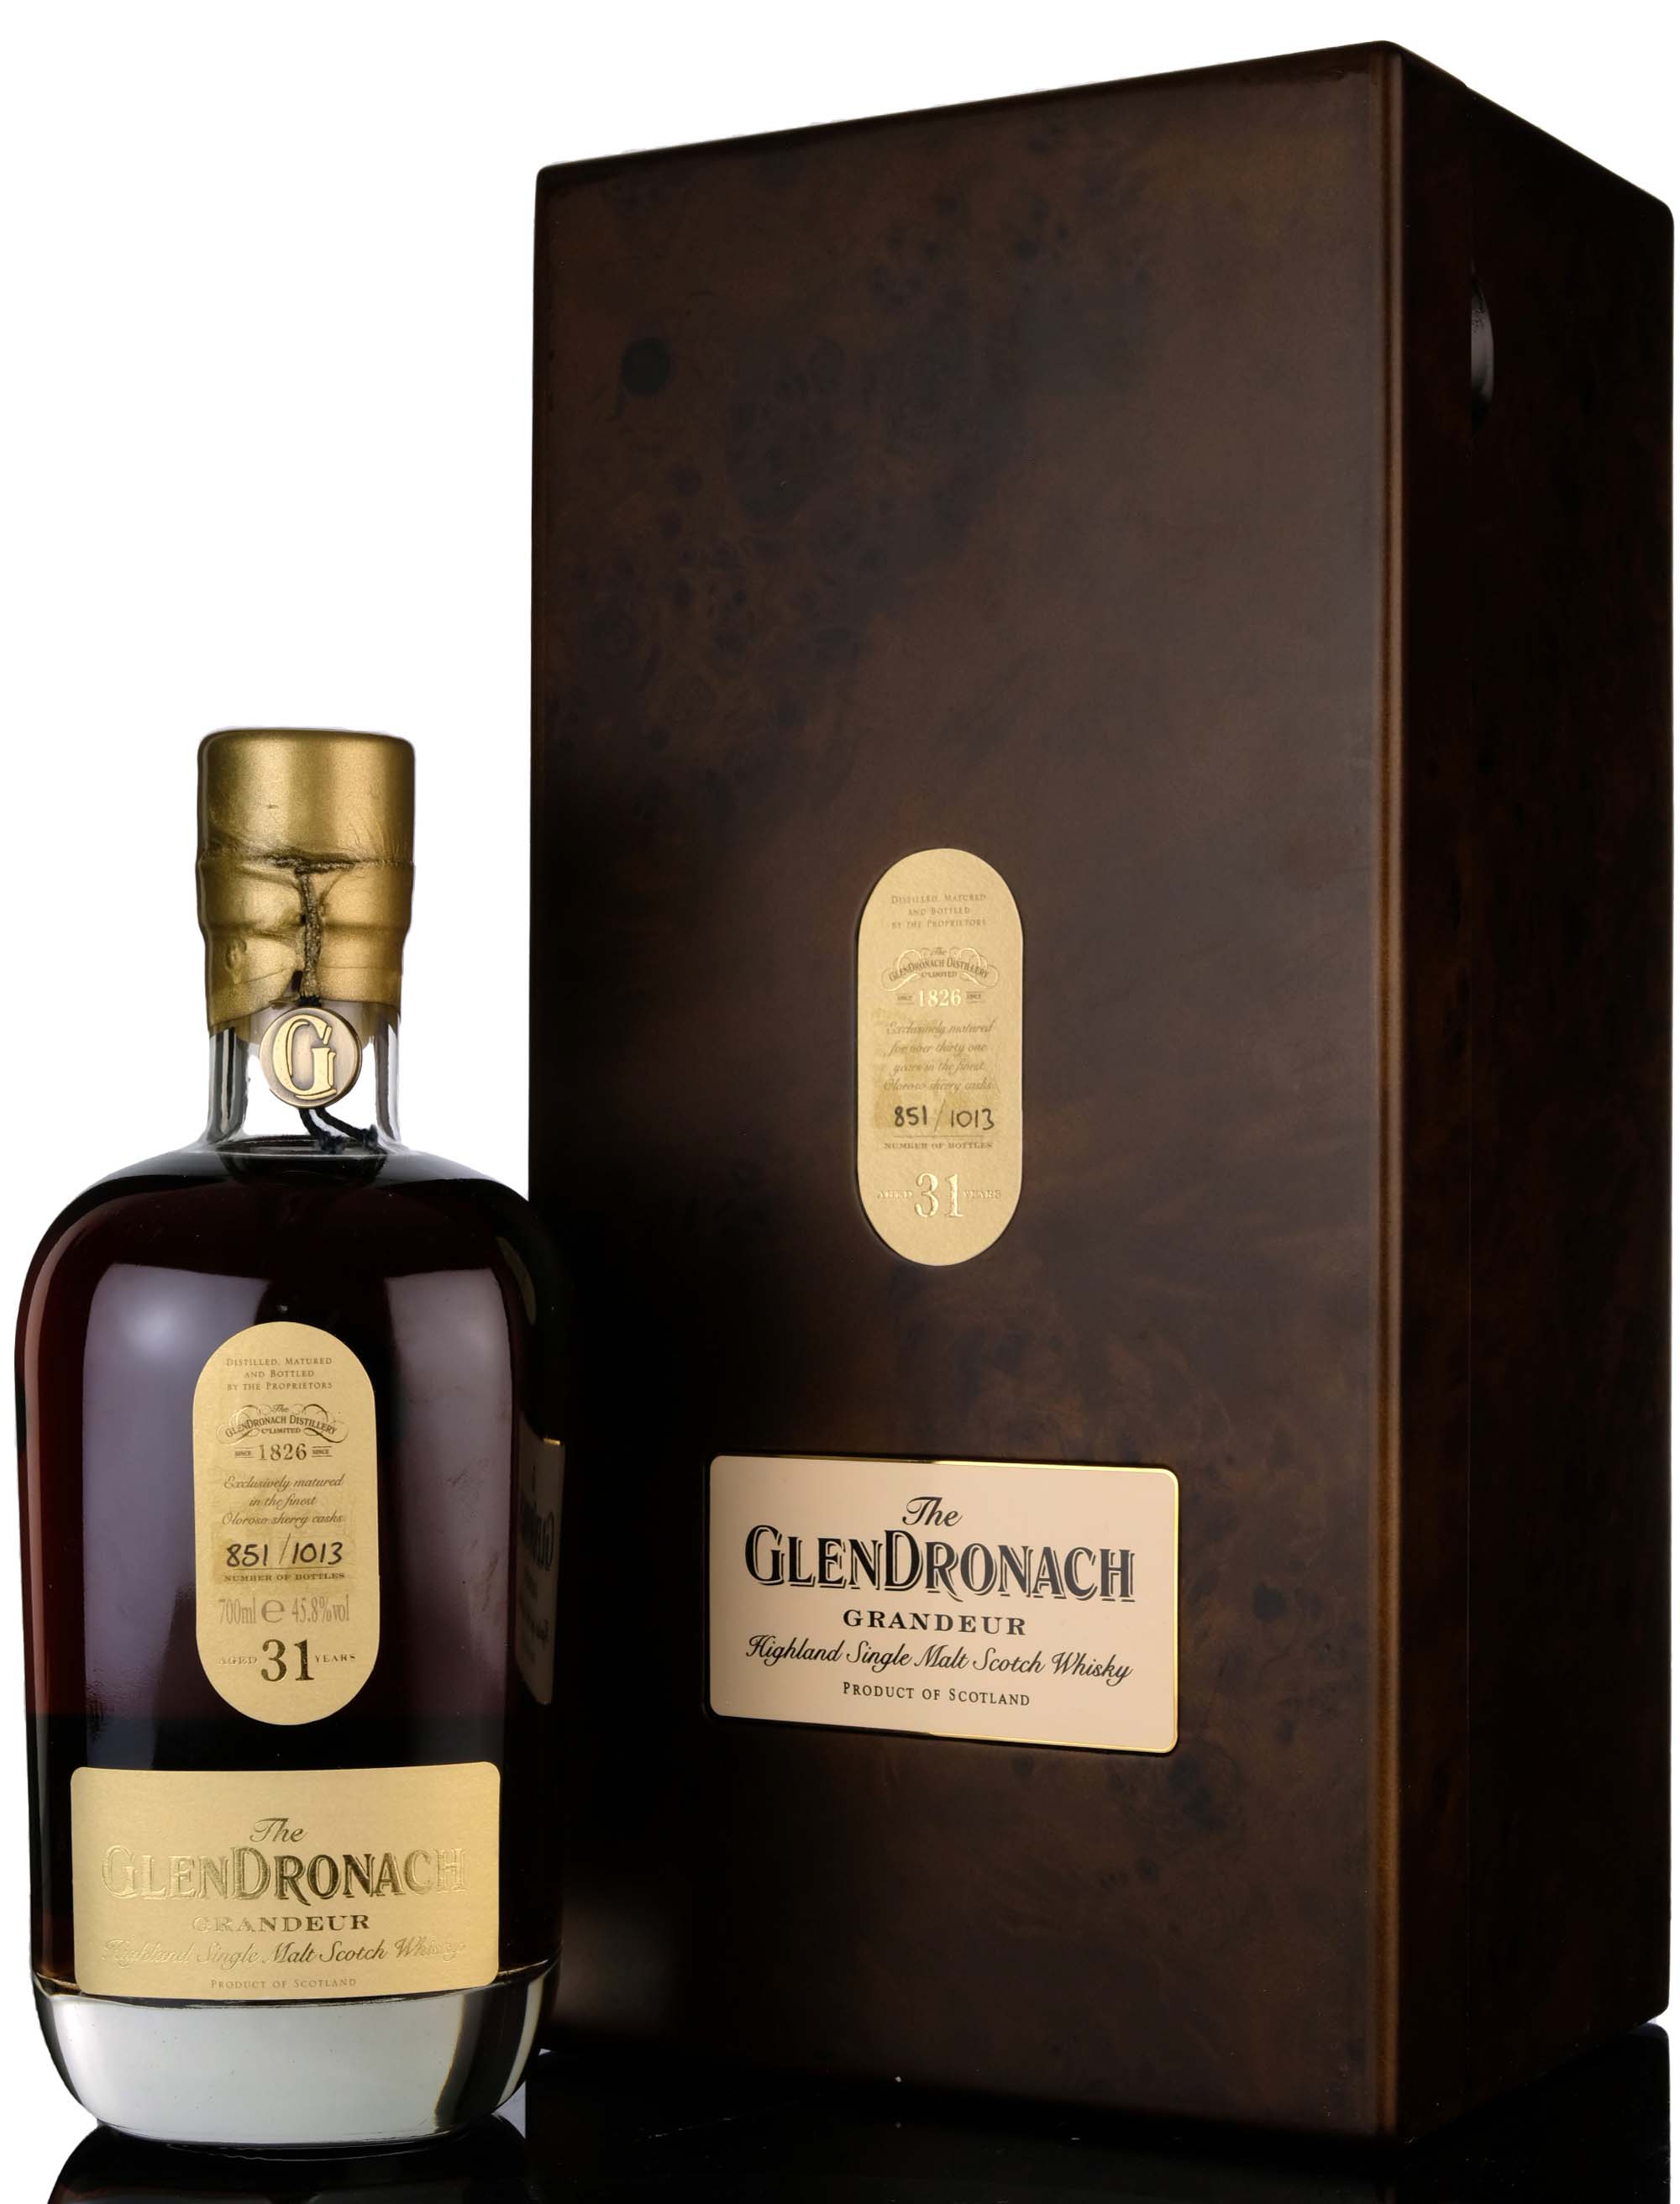 Glendronach 31 Year Old - Grandeur Batch 1 - 2010 Release